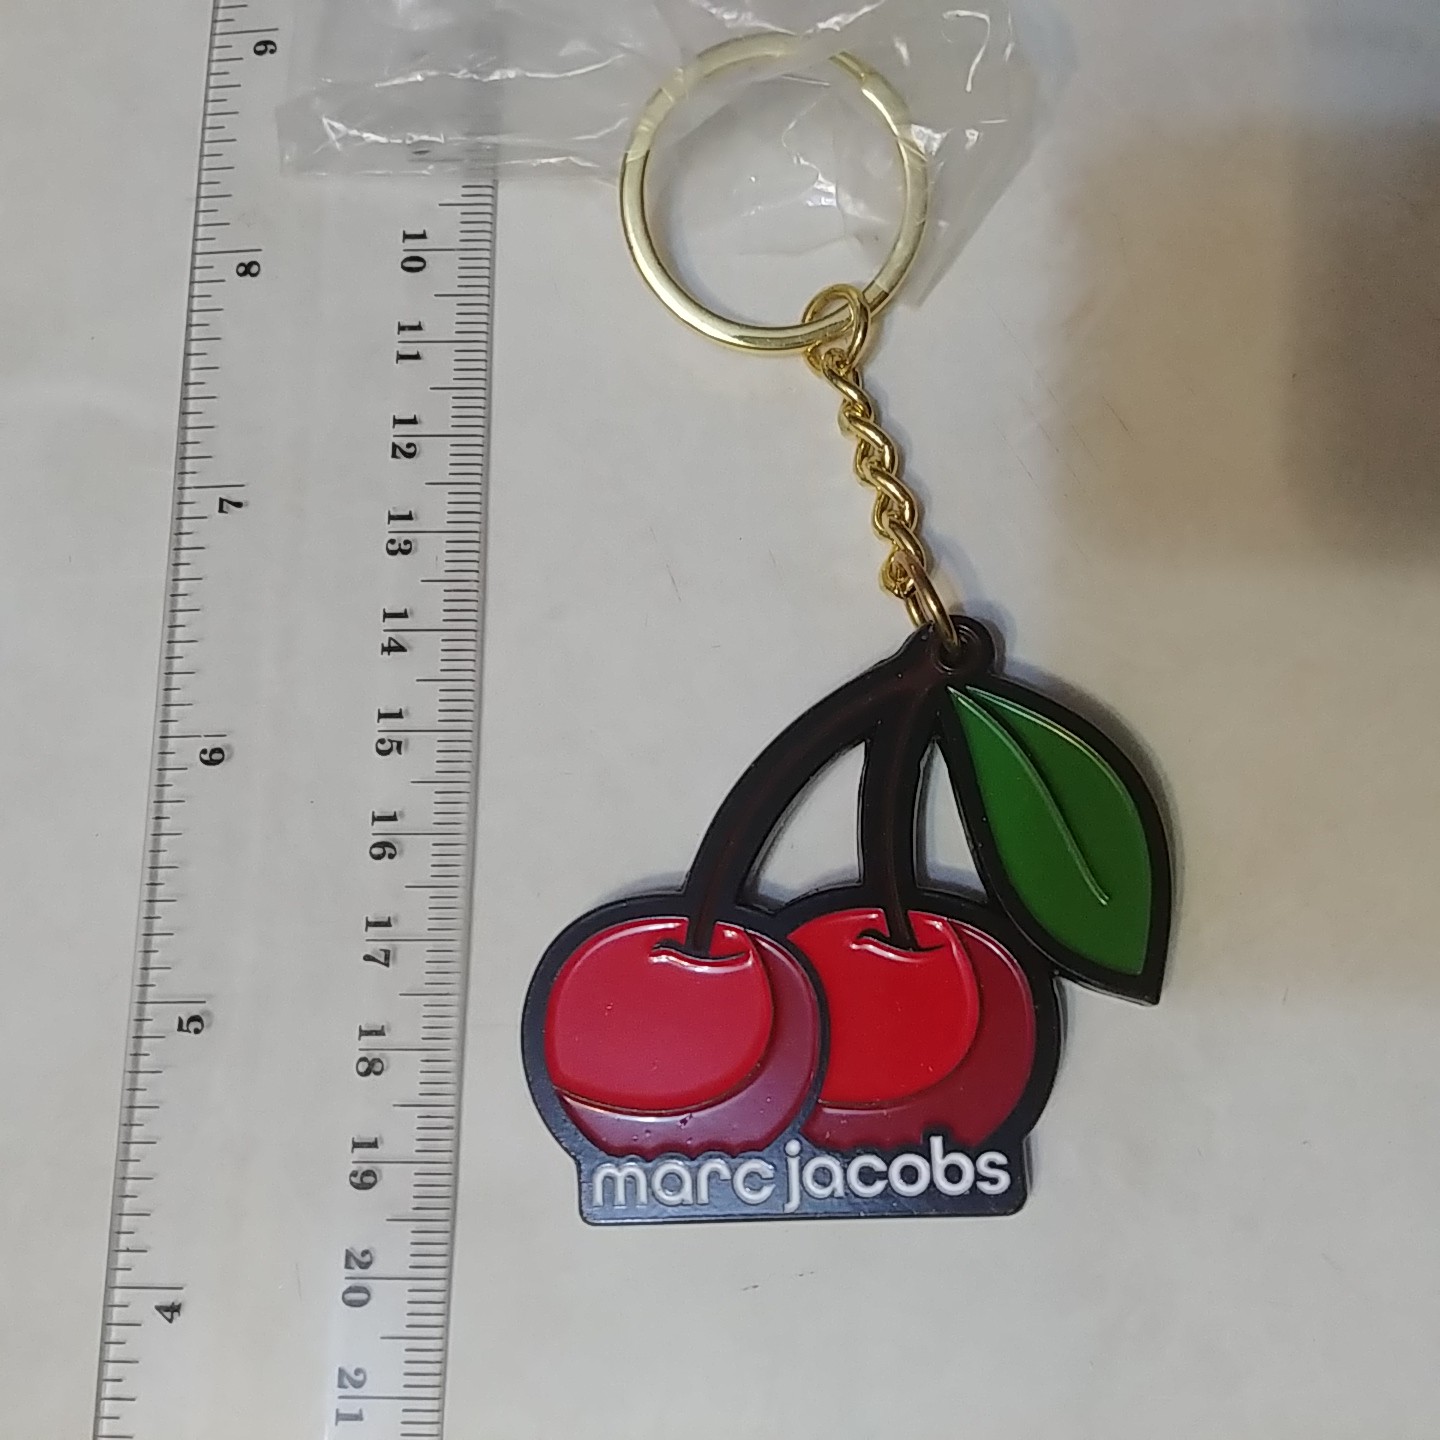 Marc jacobs cherry keychain key ring bag charm New no packing 如圖